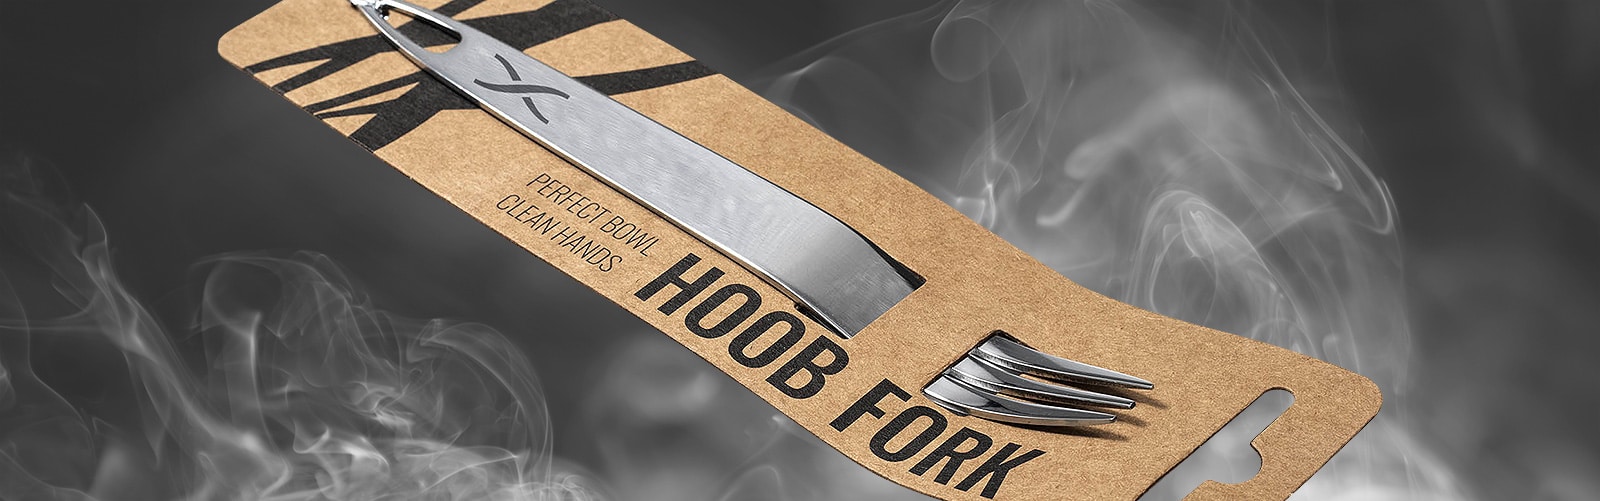 Tobacco fork